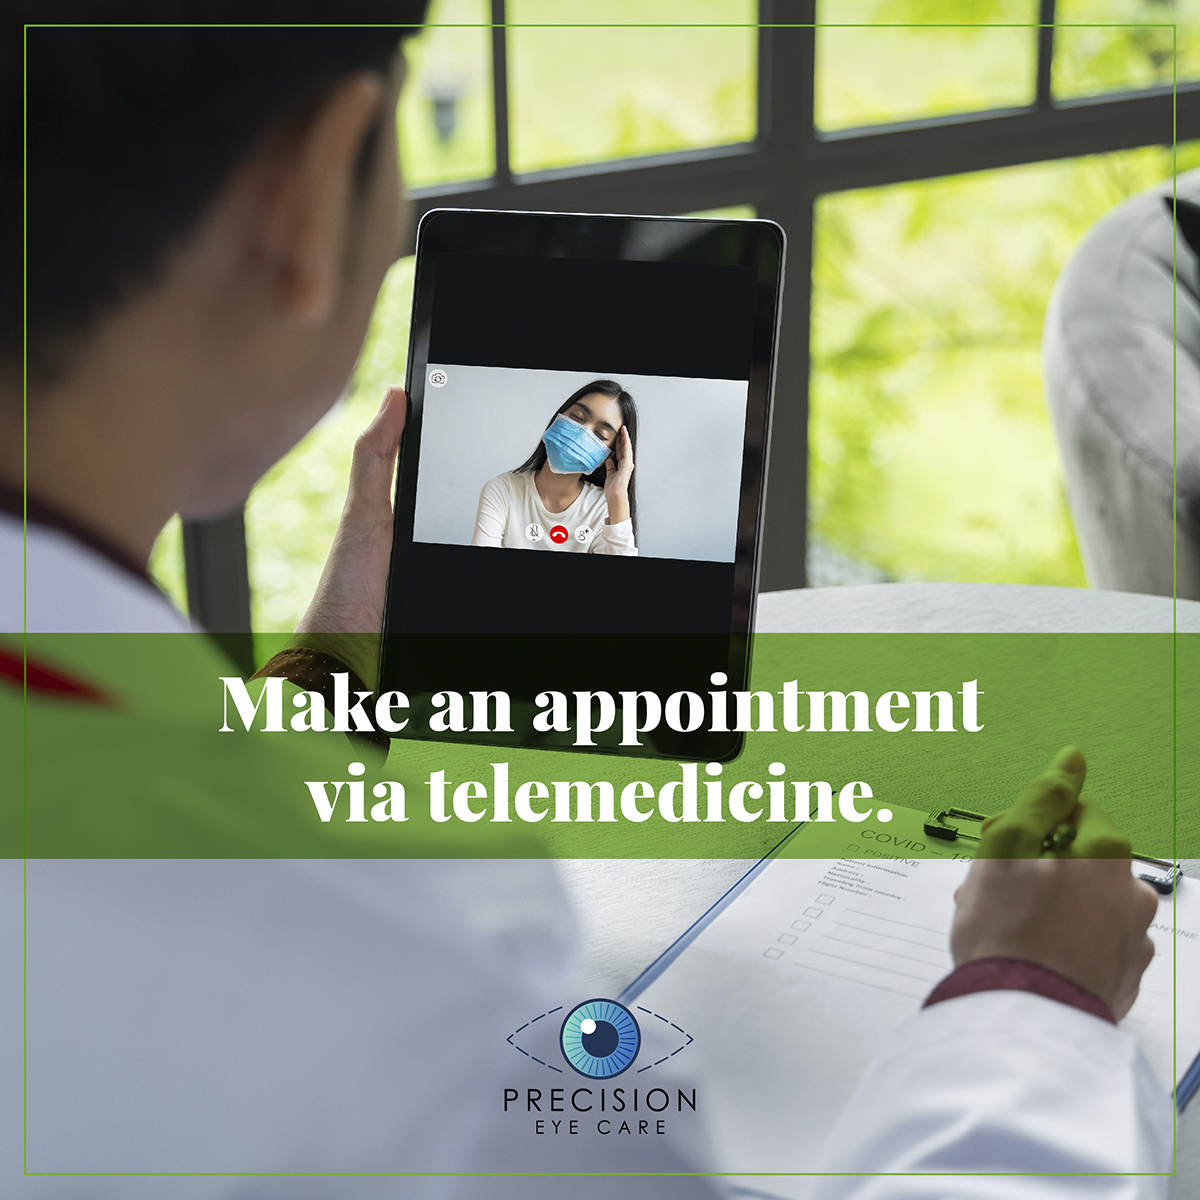 Make an appointment via telemedicine